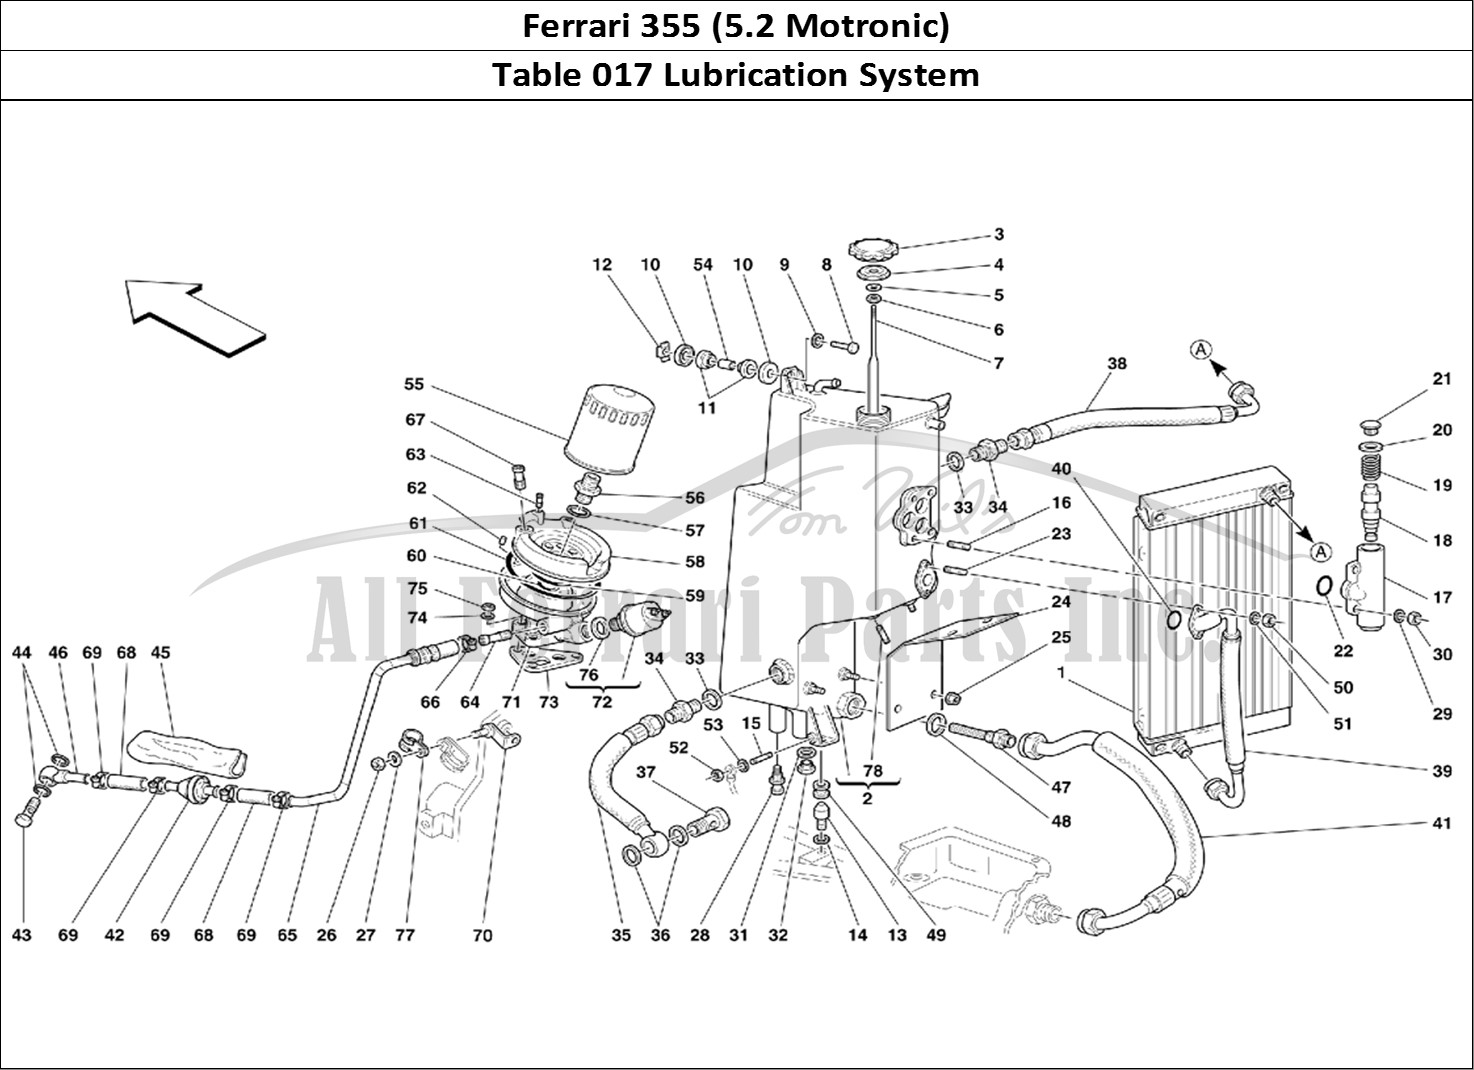 Ferrari Parts Ferrari 355 (5.2 Motronic) Page 017 Lubrication System